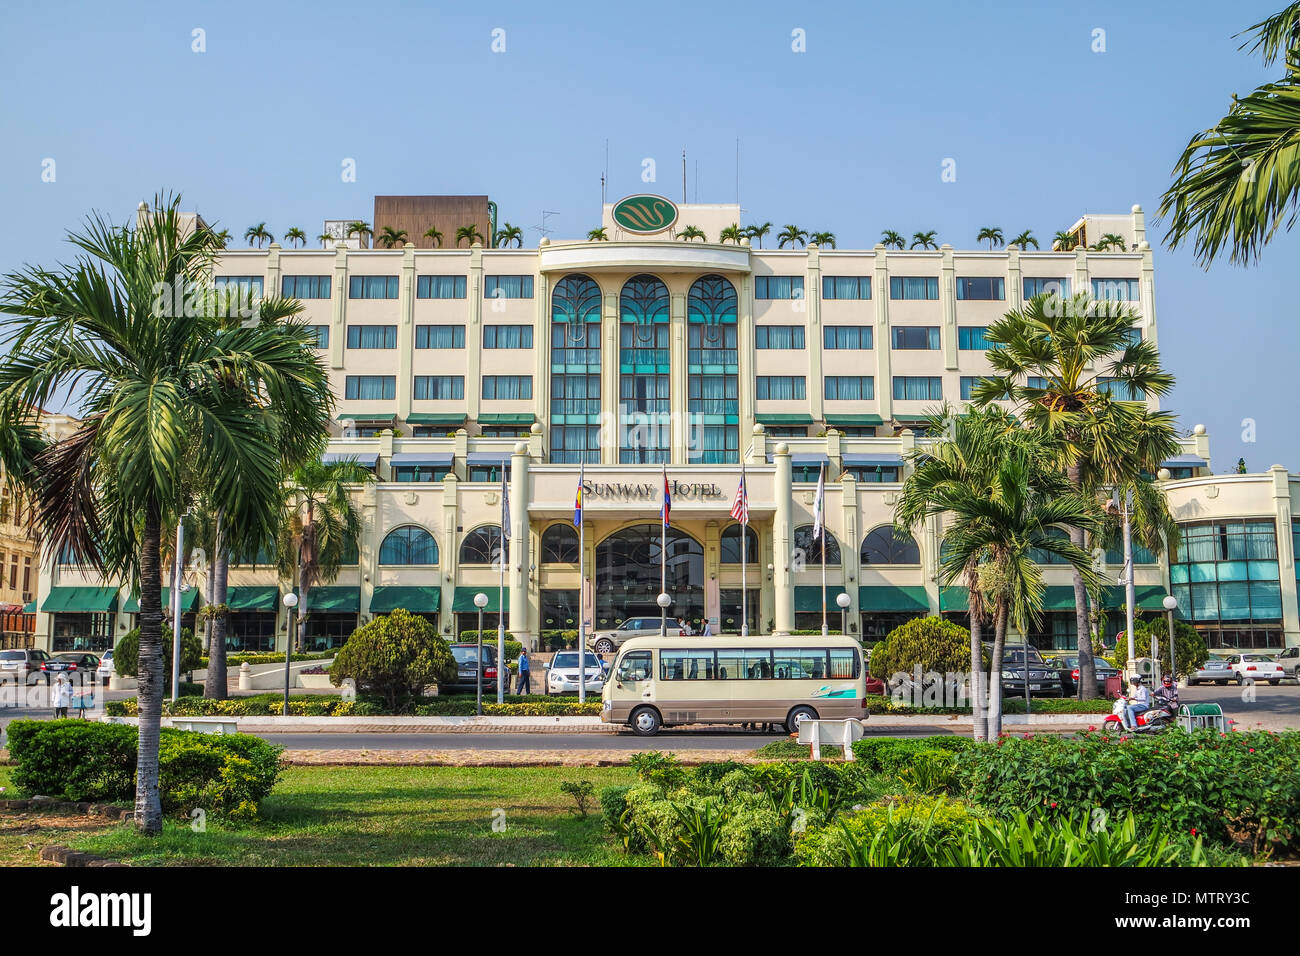 Das Sunway Hotel Phnom Penh Kambodscha Stockfoto